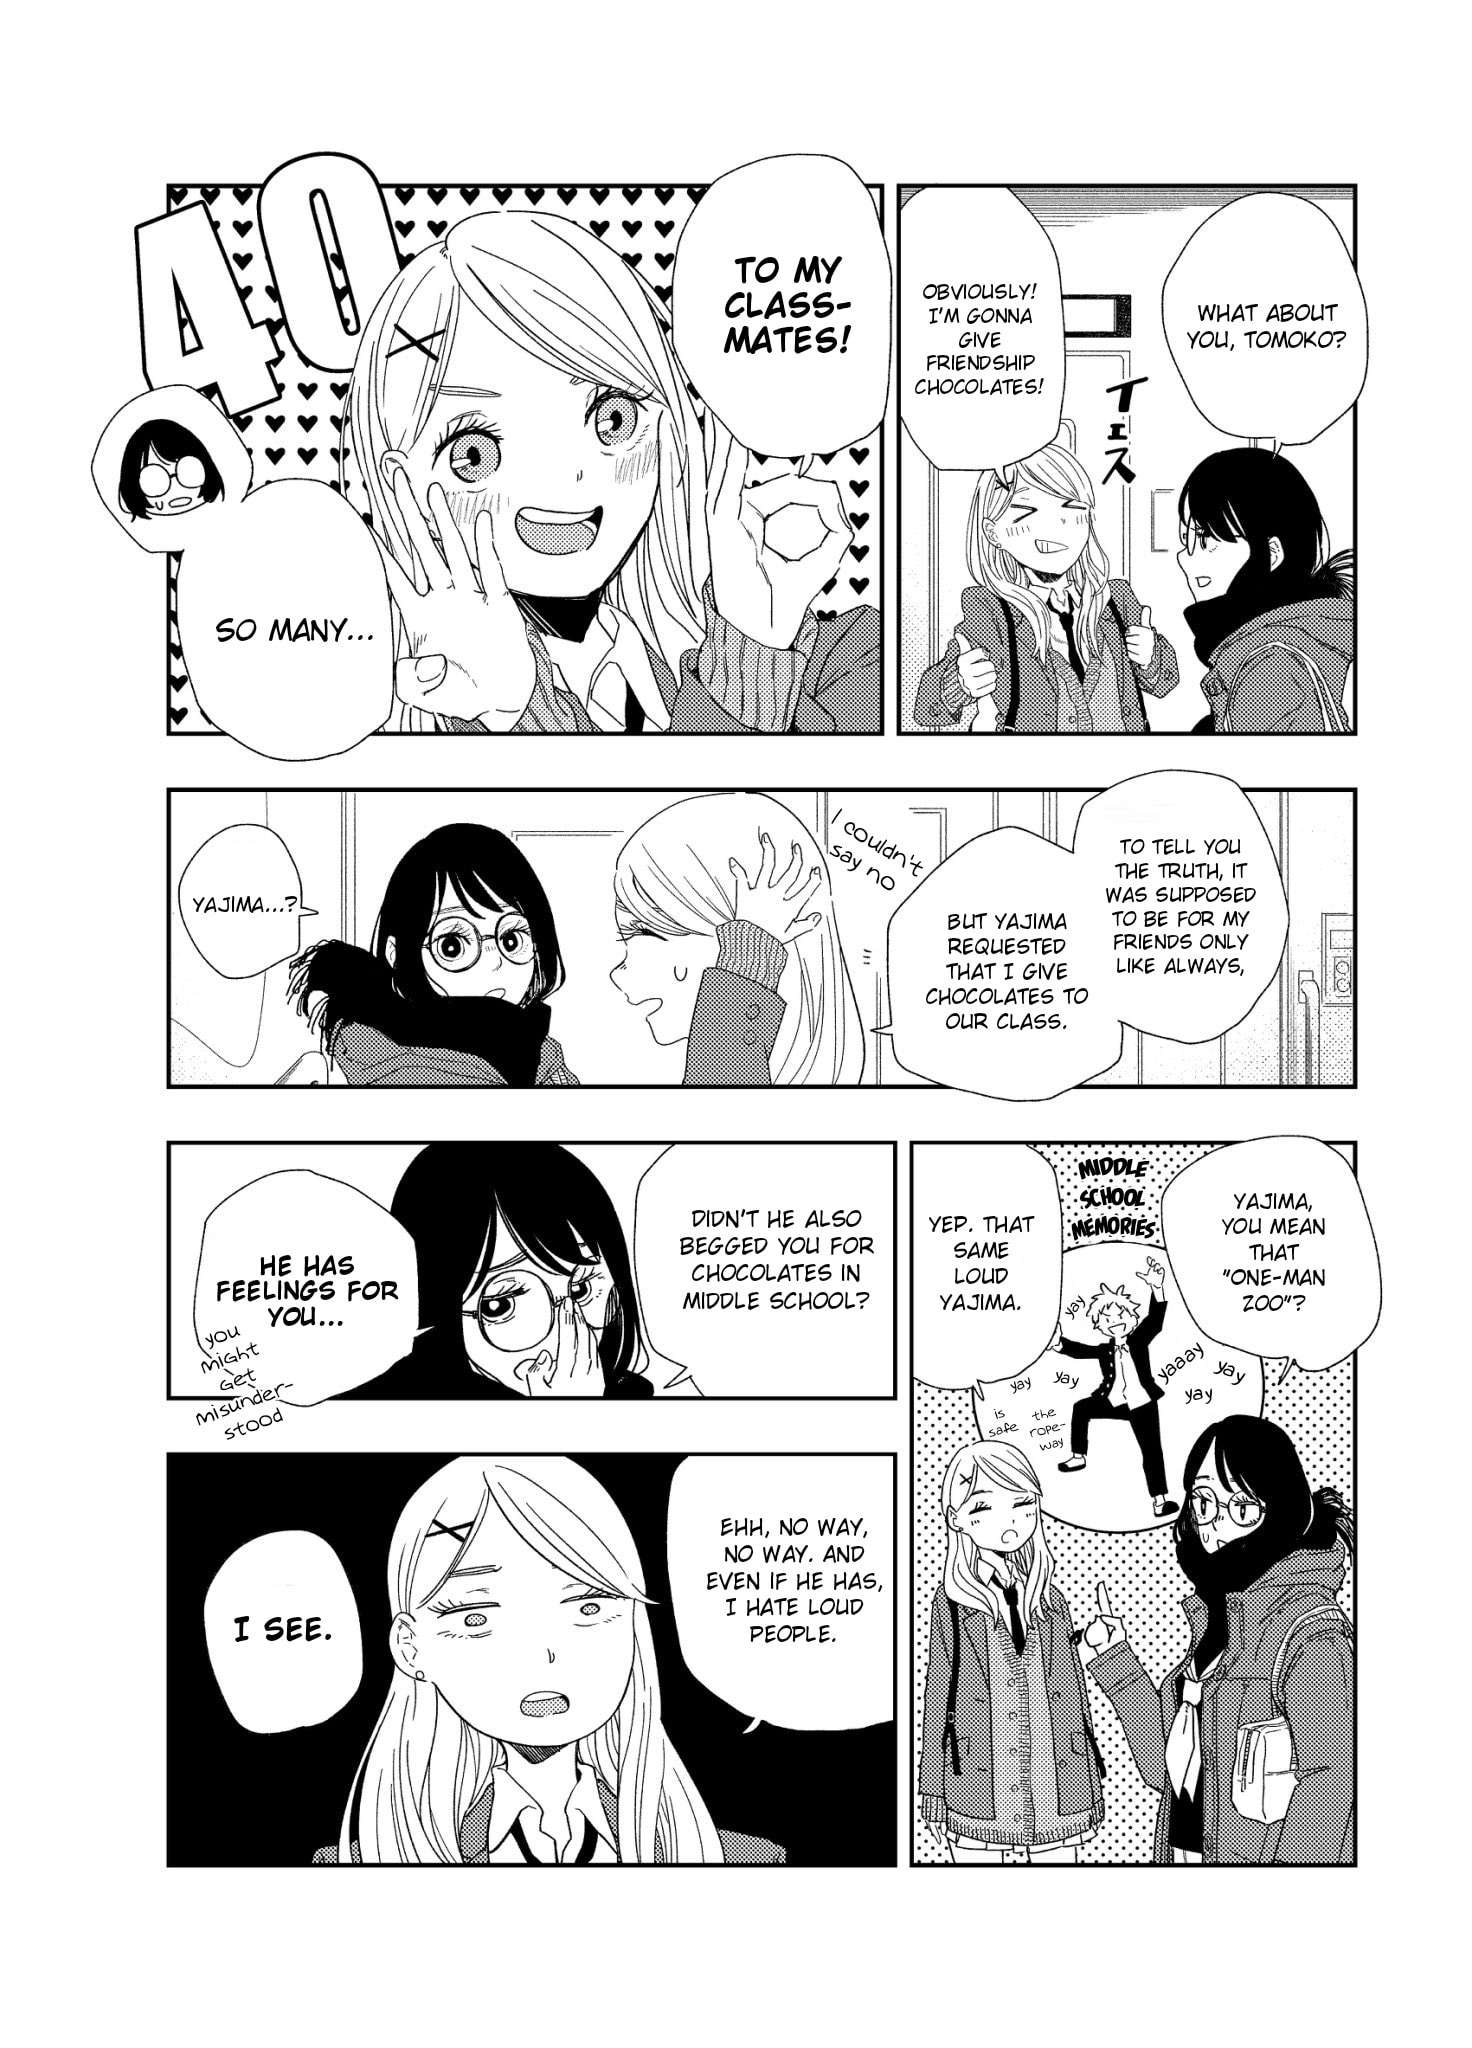 Tomoko & Mitsuki - chapter 4 - #2